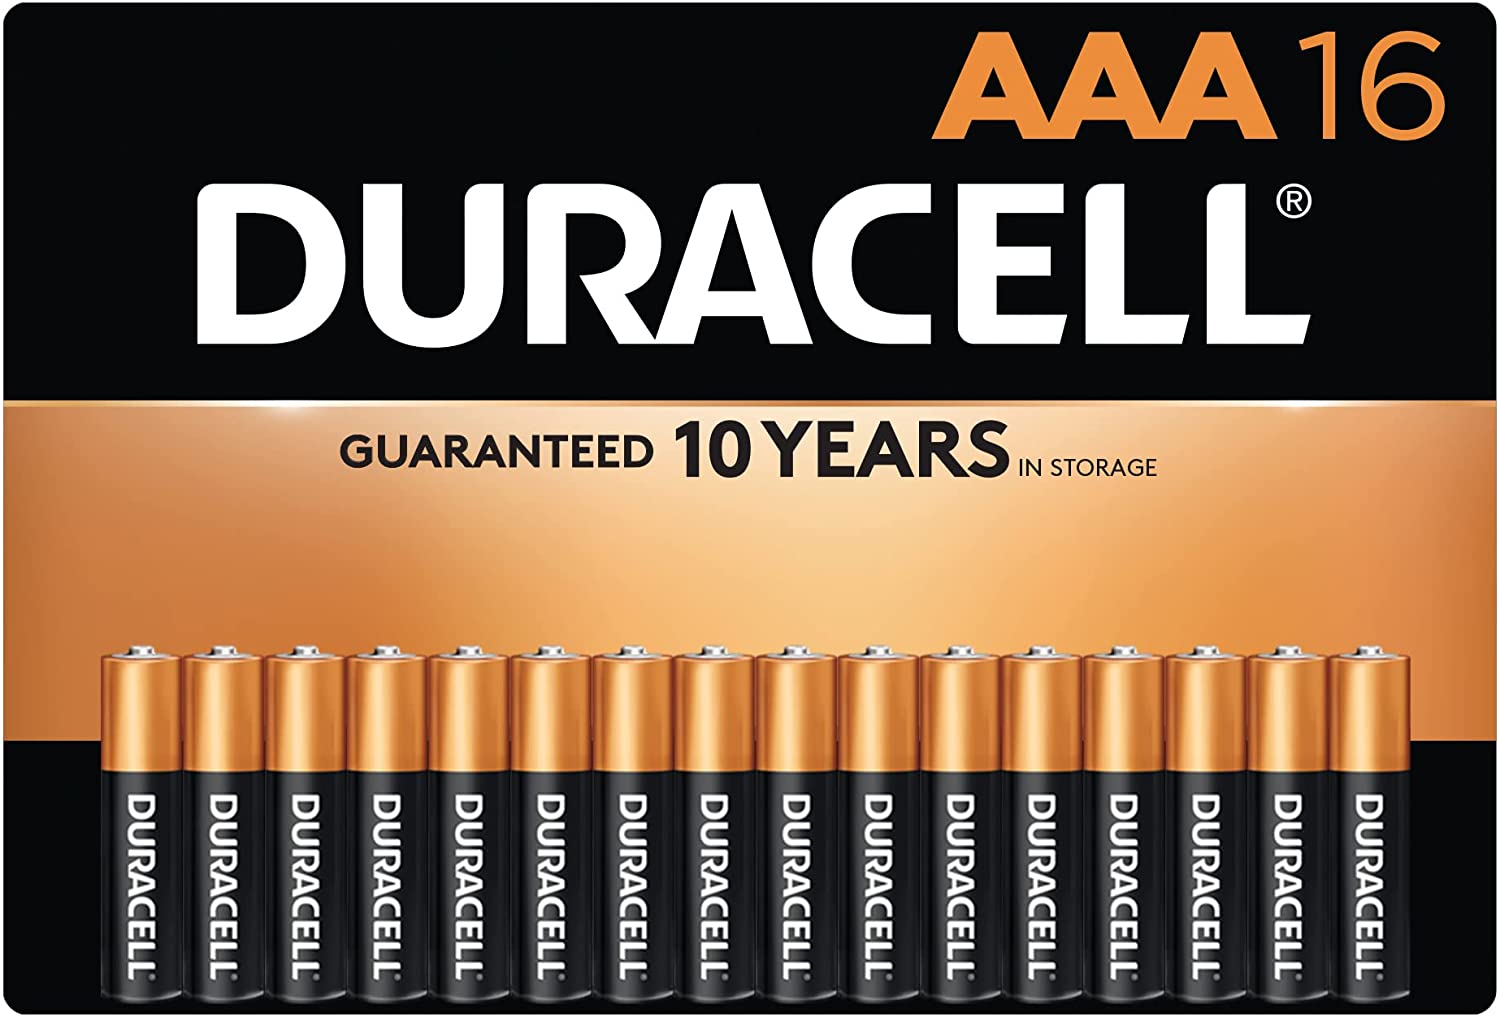 Duracell AAA batteries.